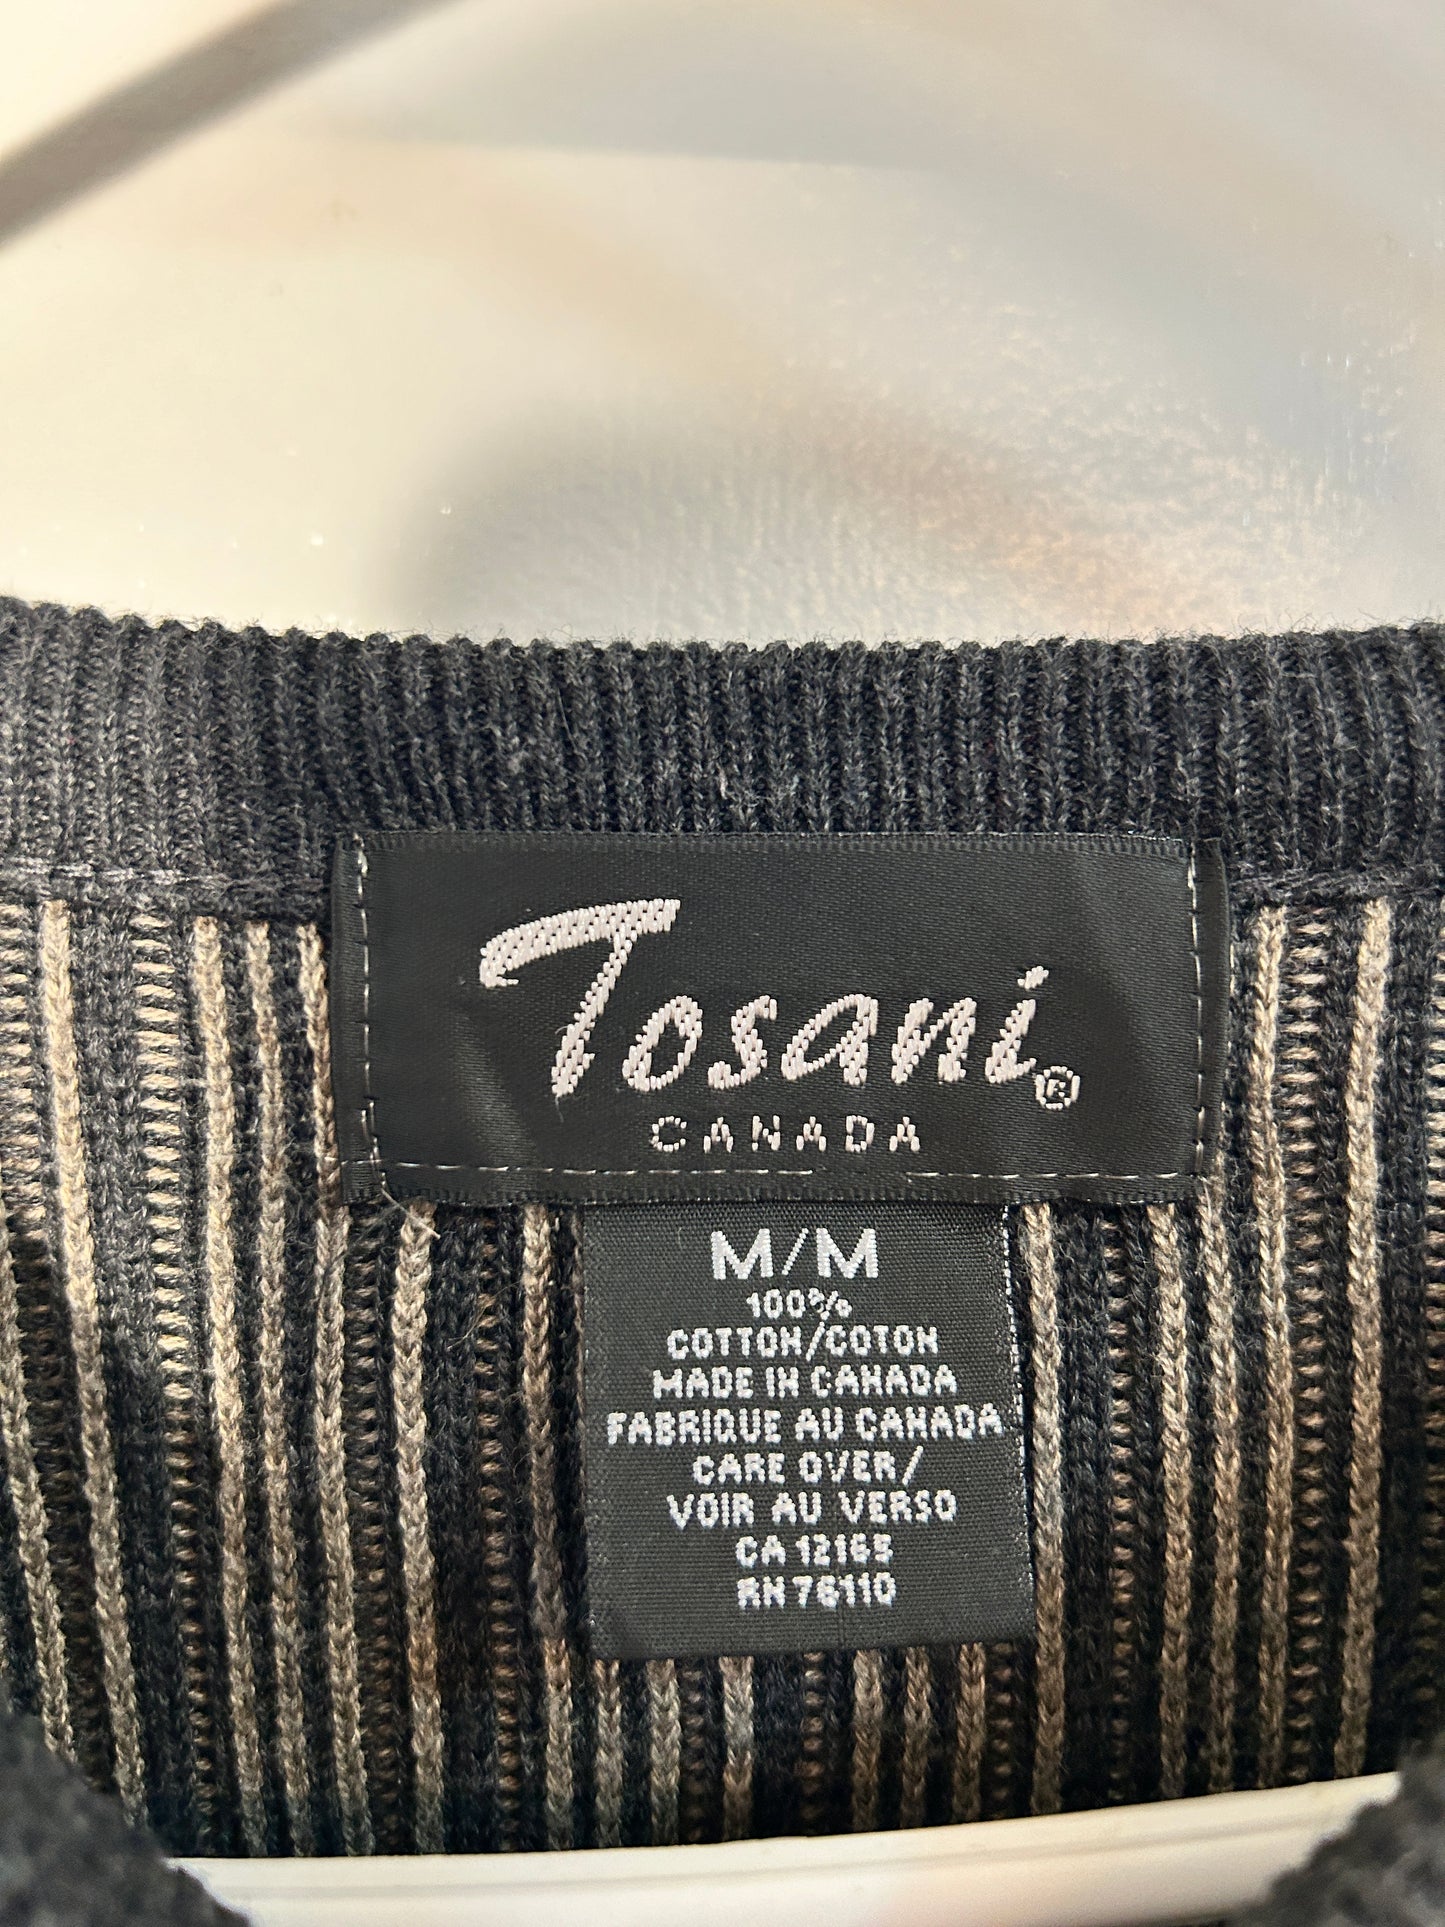 Tosani Textured Knit Sweater (M)